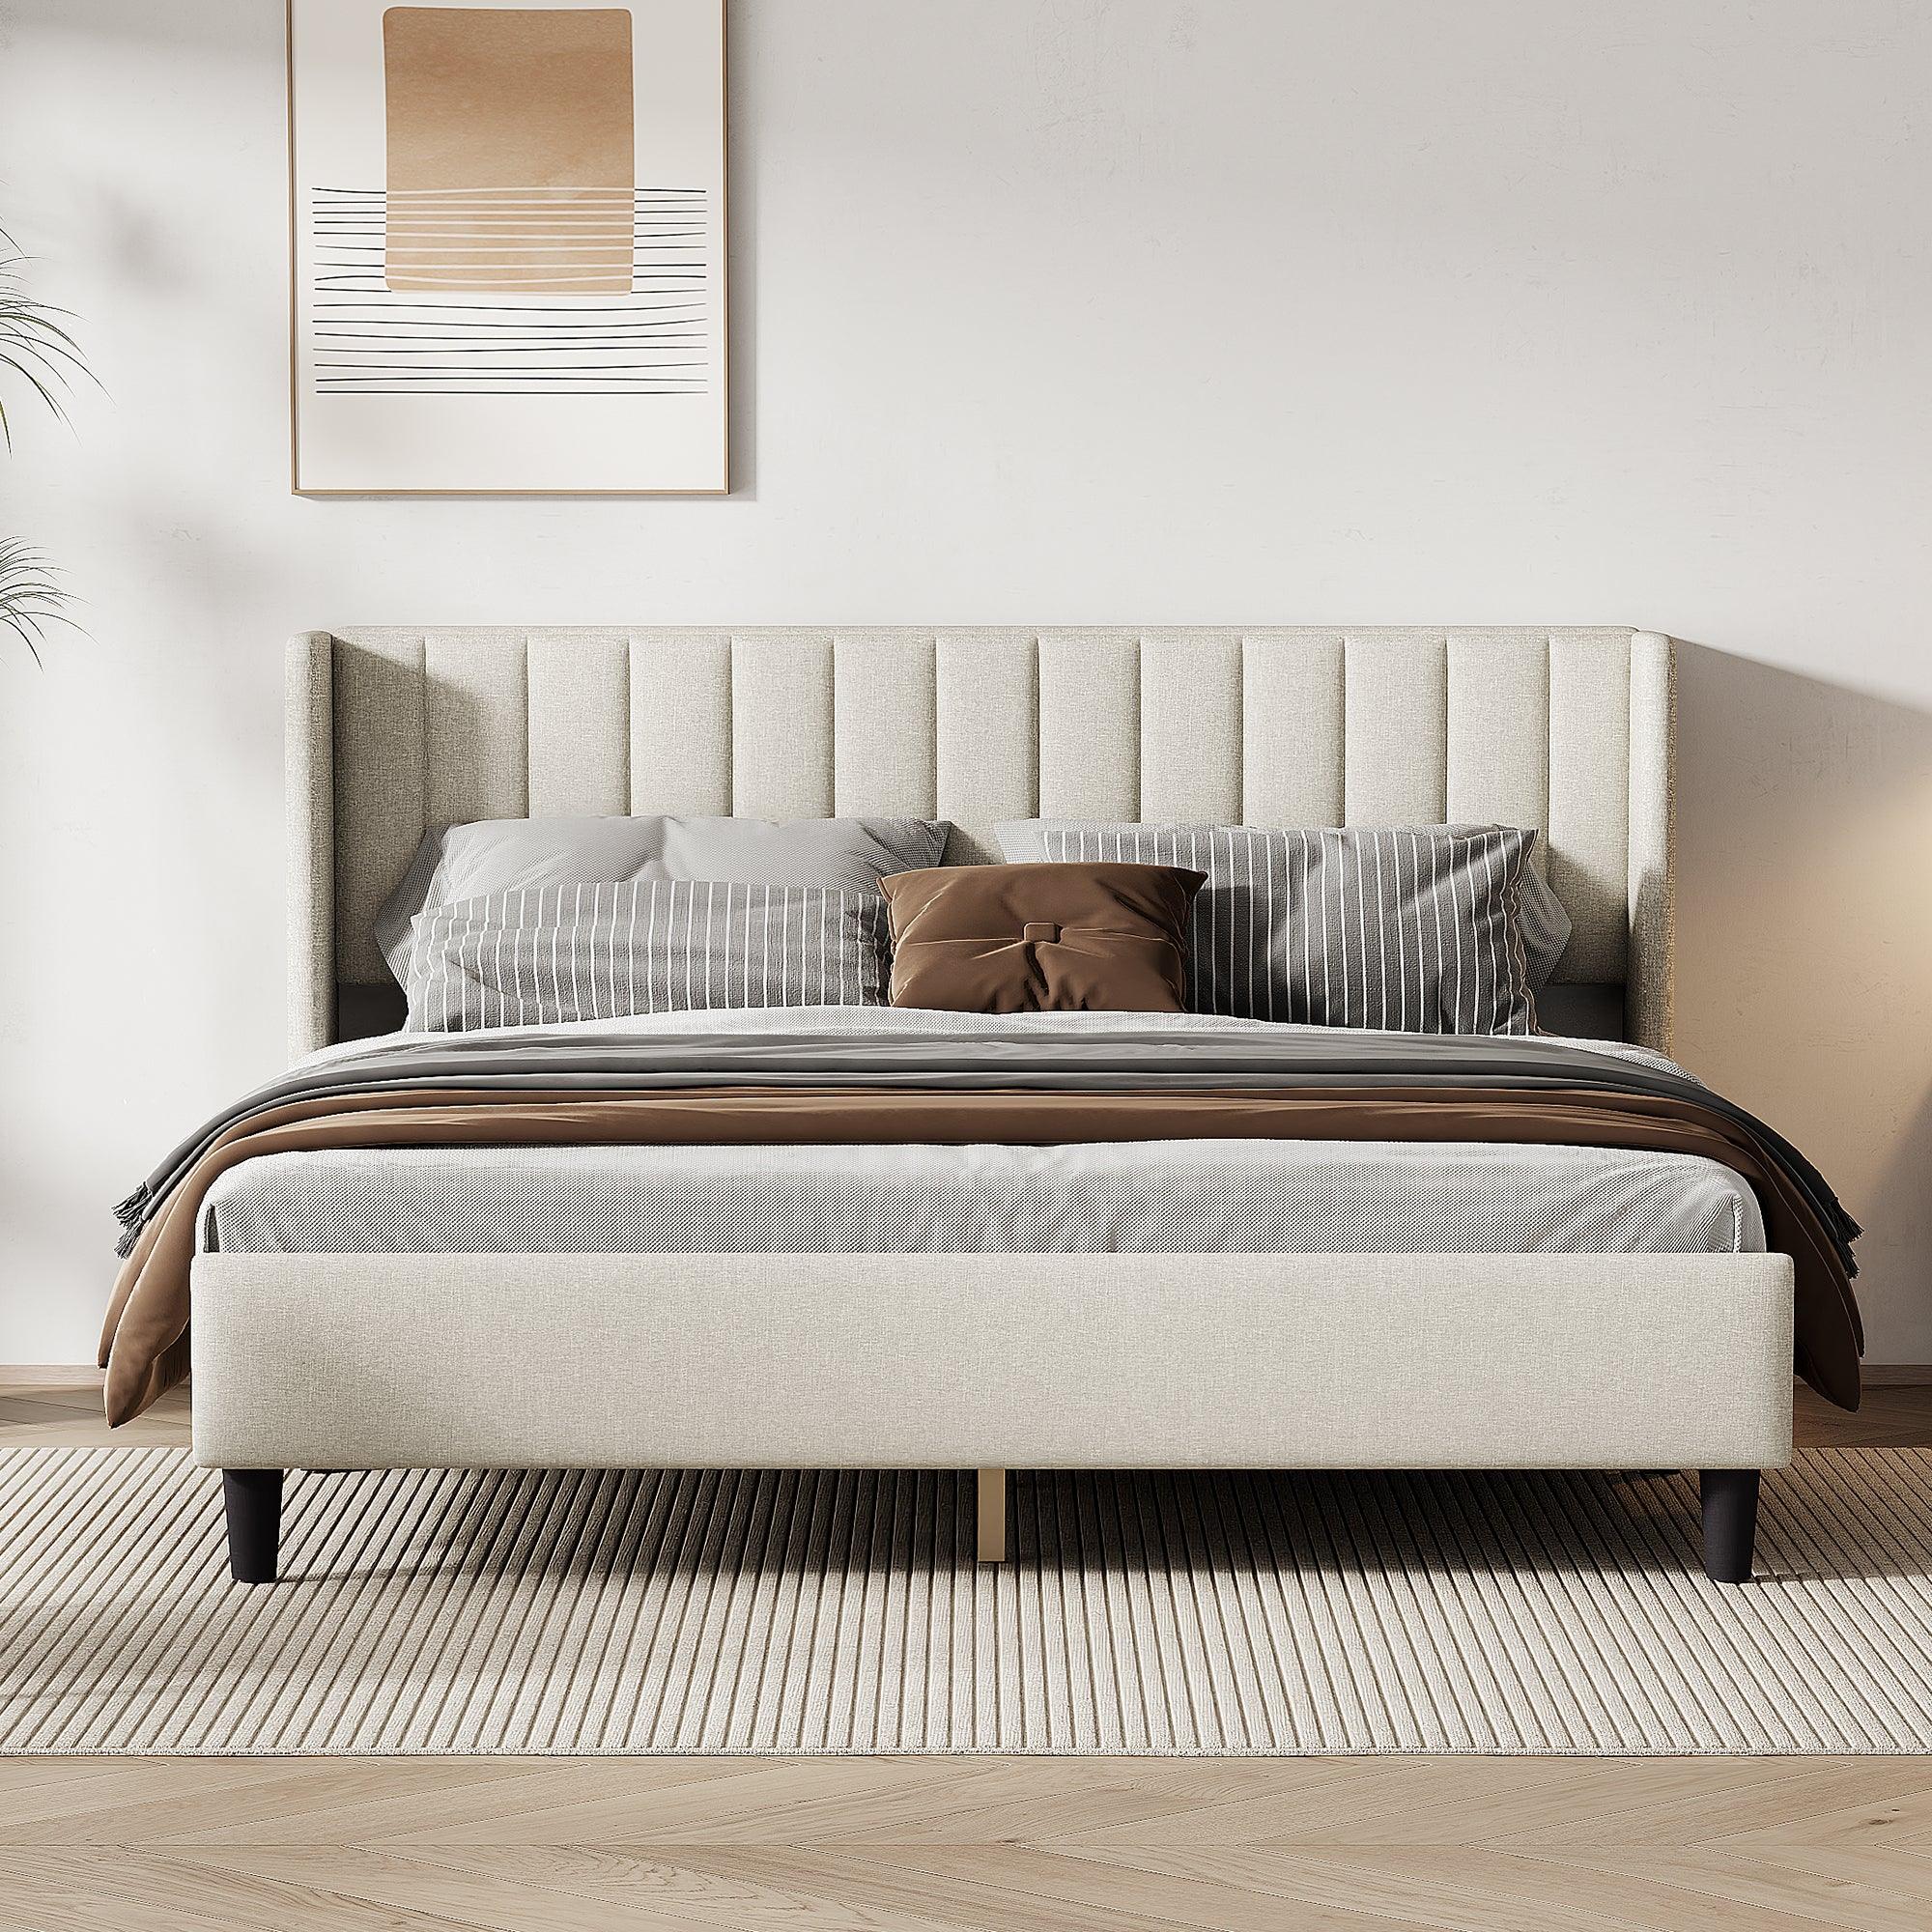 🆓🚛 King Size Upholstered Platform Bed Frame With Headboard, Mattress Foundation, Wood Slat Support, Cream